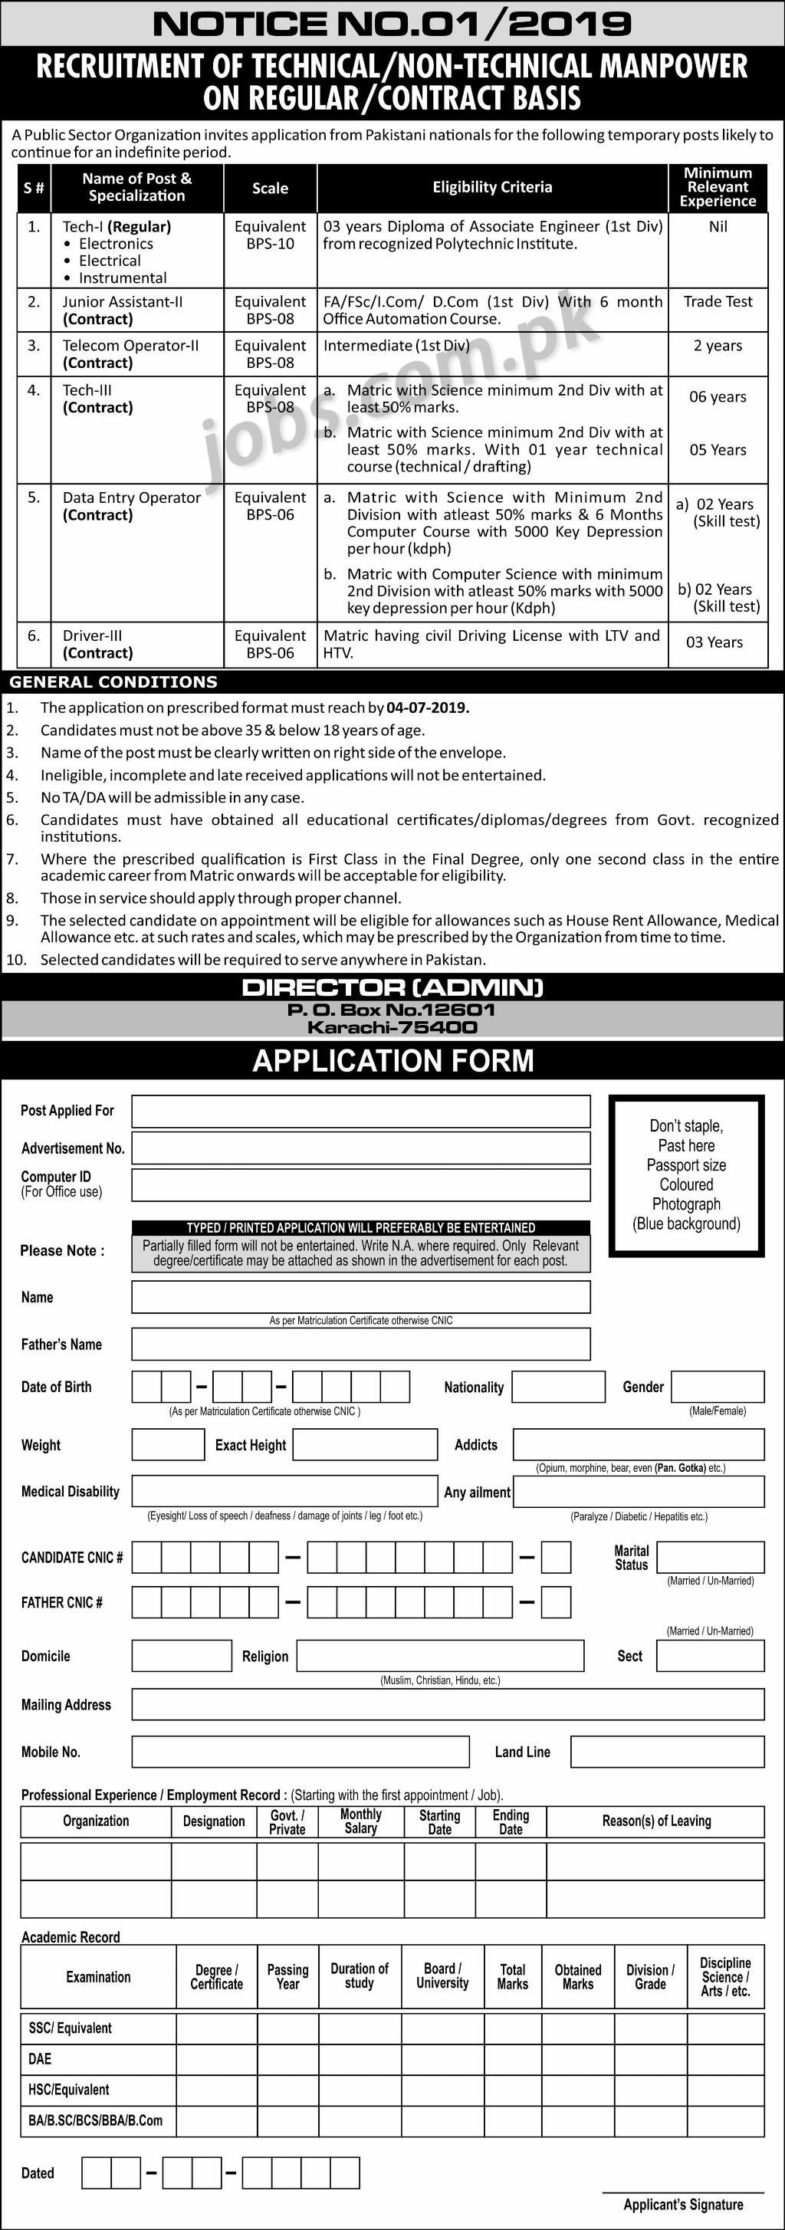 PO Box 12601 Public Sector Org Jobs 2019 for Jr Assistants-II, Telecom, Tech-I/III, DEO & Other